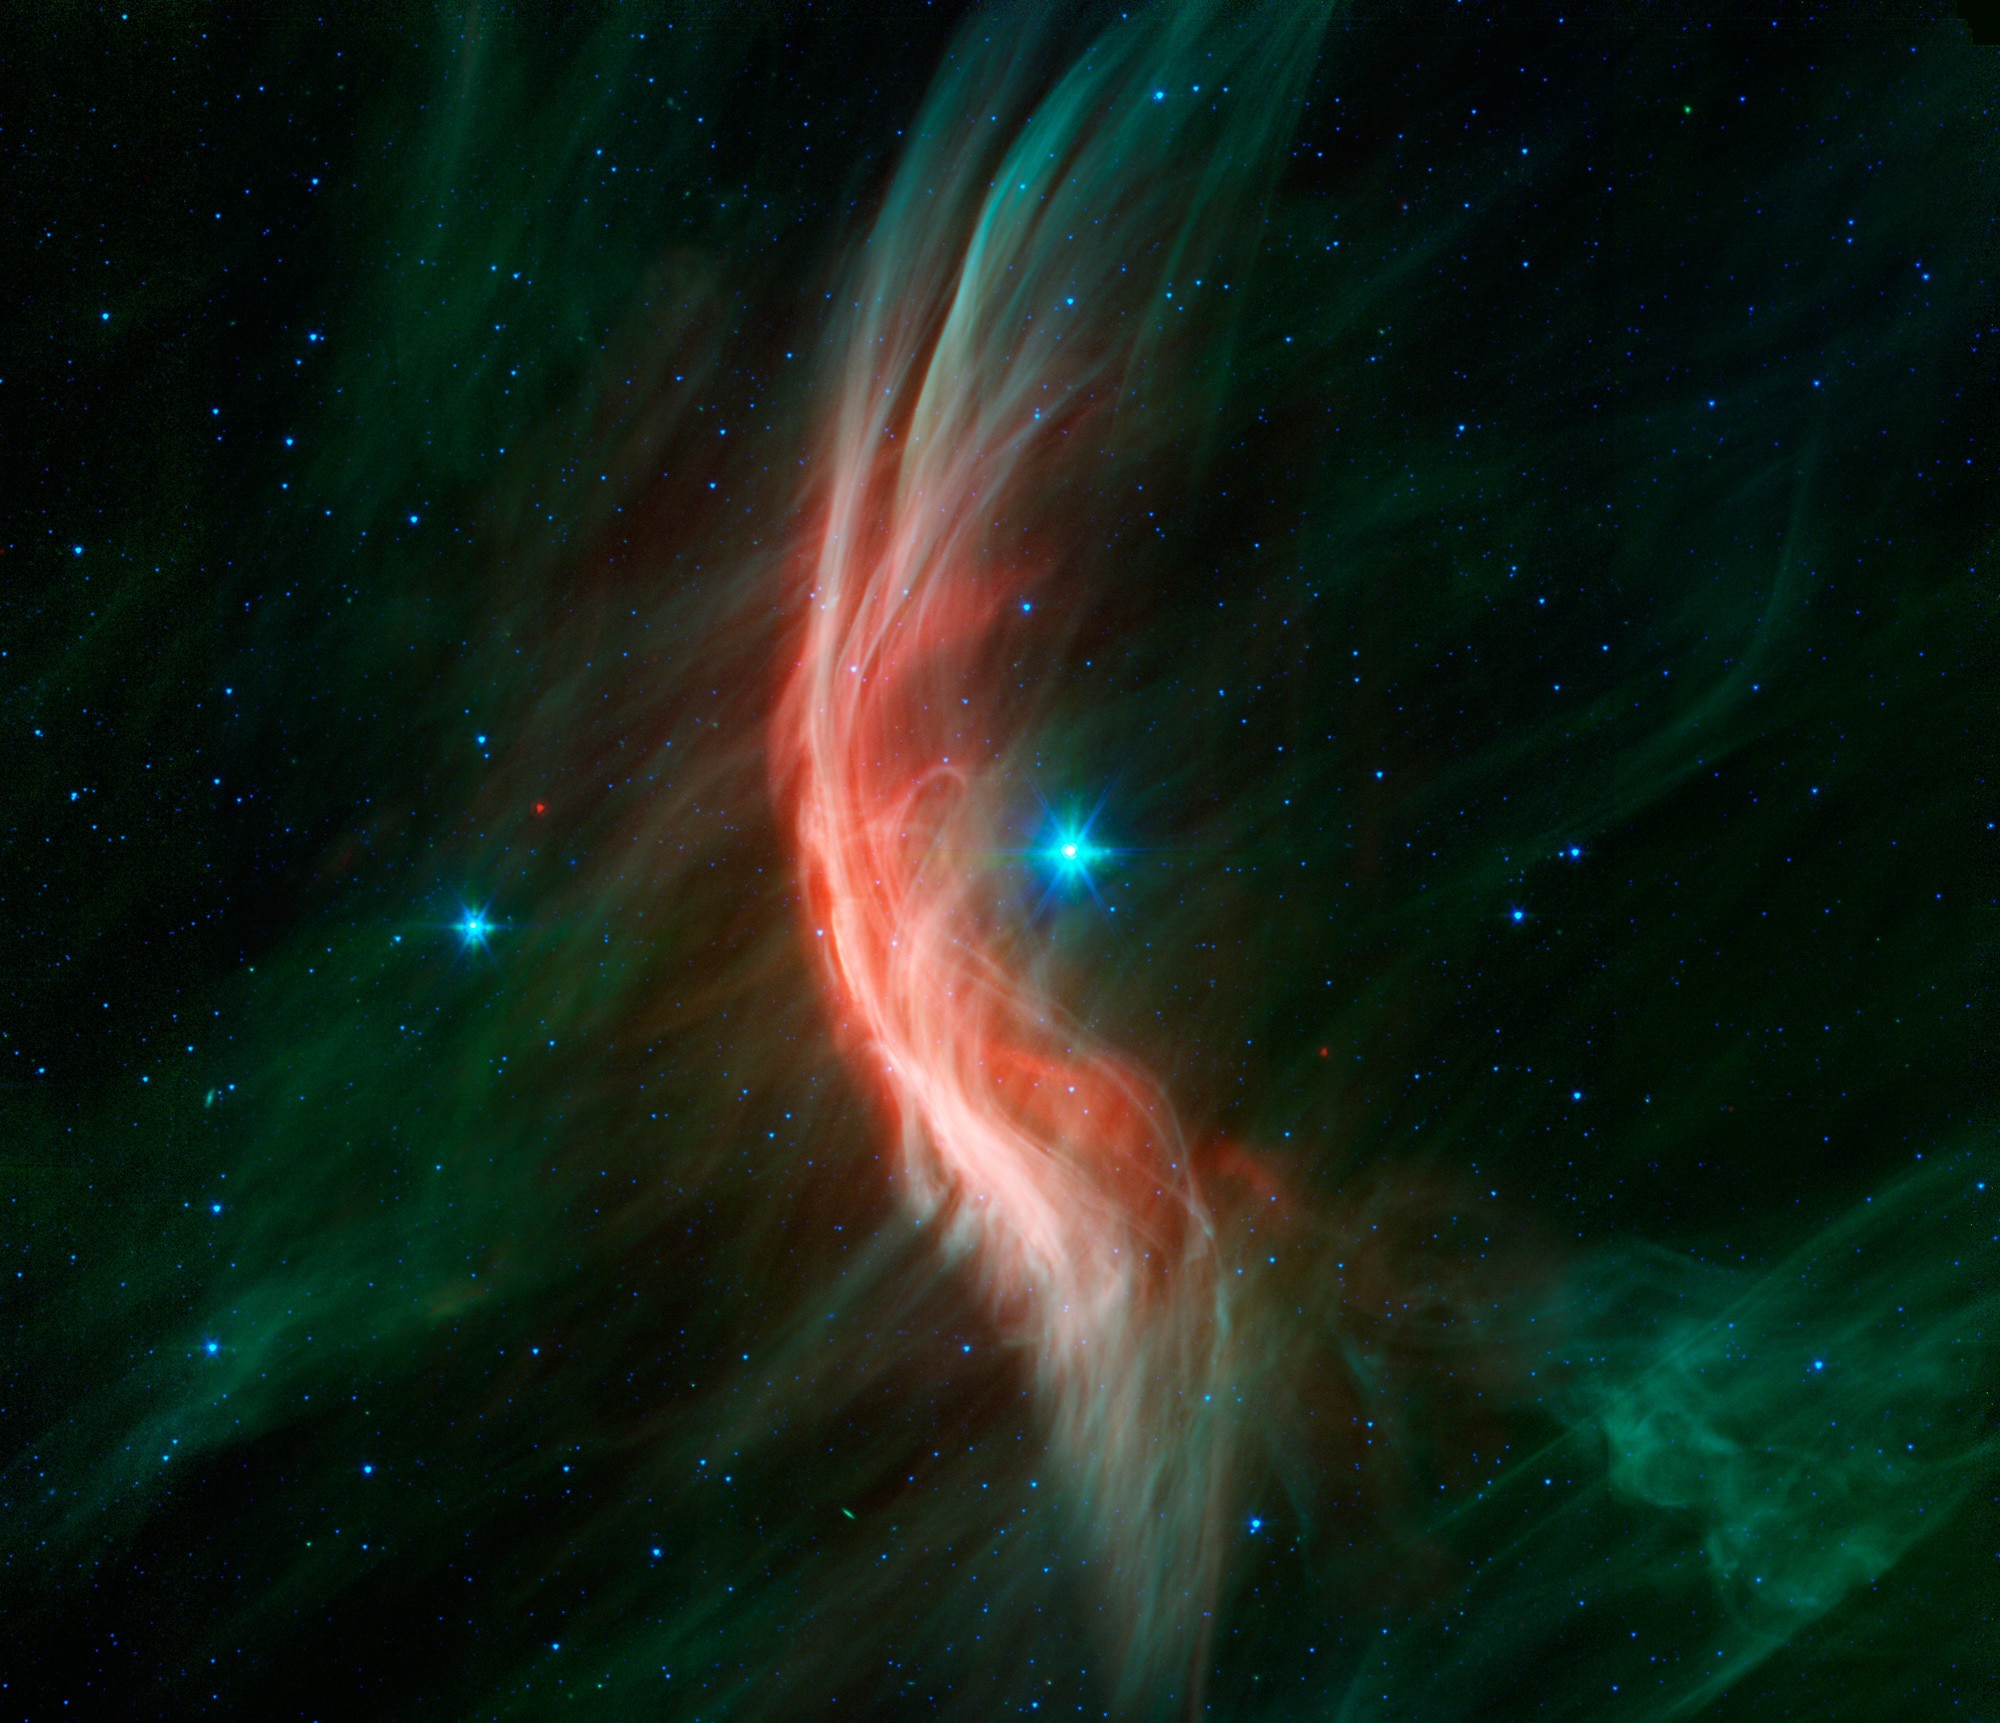 The massive star Zeta Oph making waves. Credit: NASA/JPL-Caltech